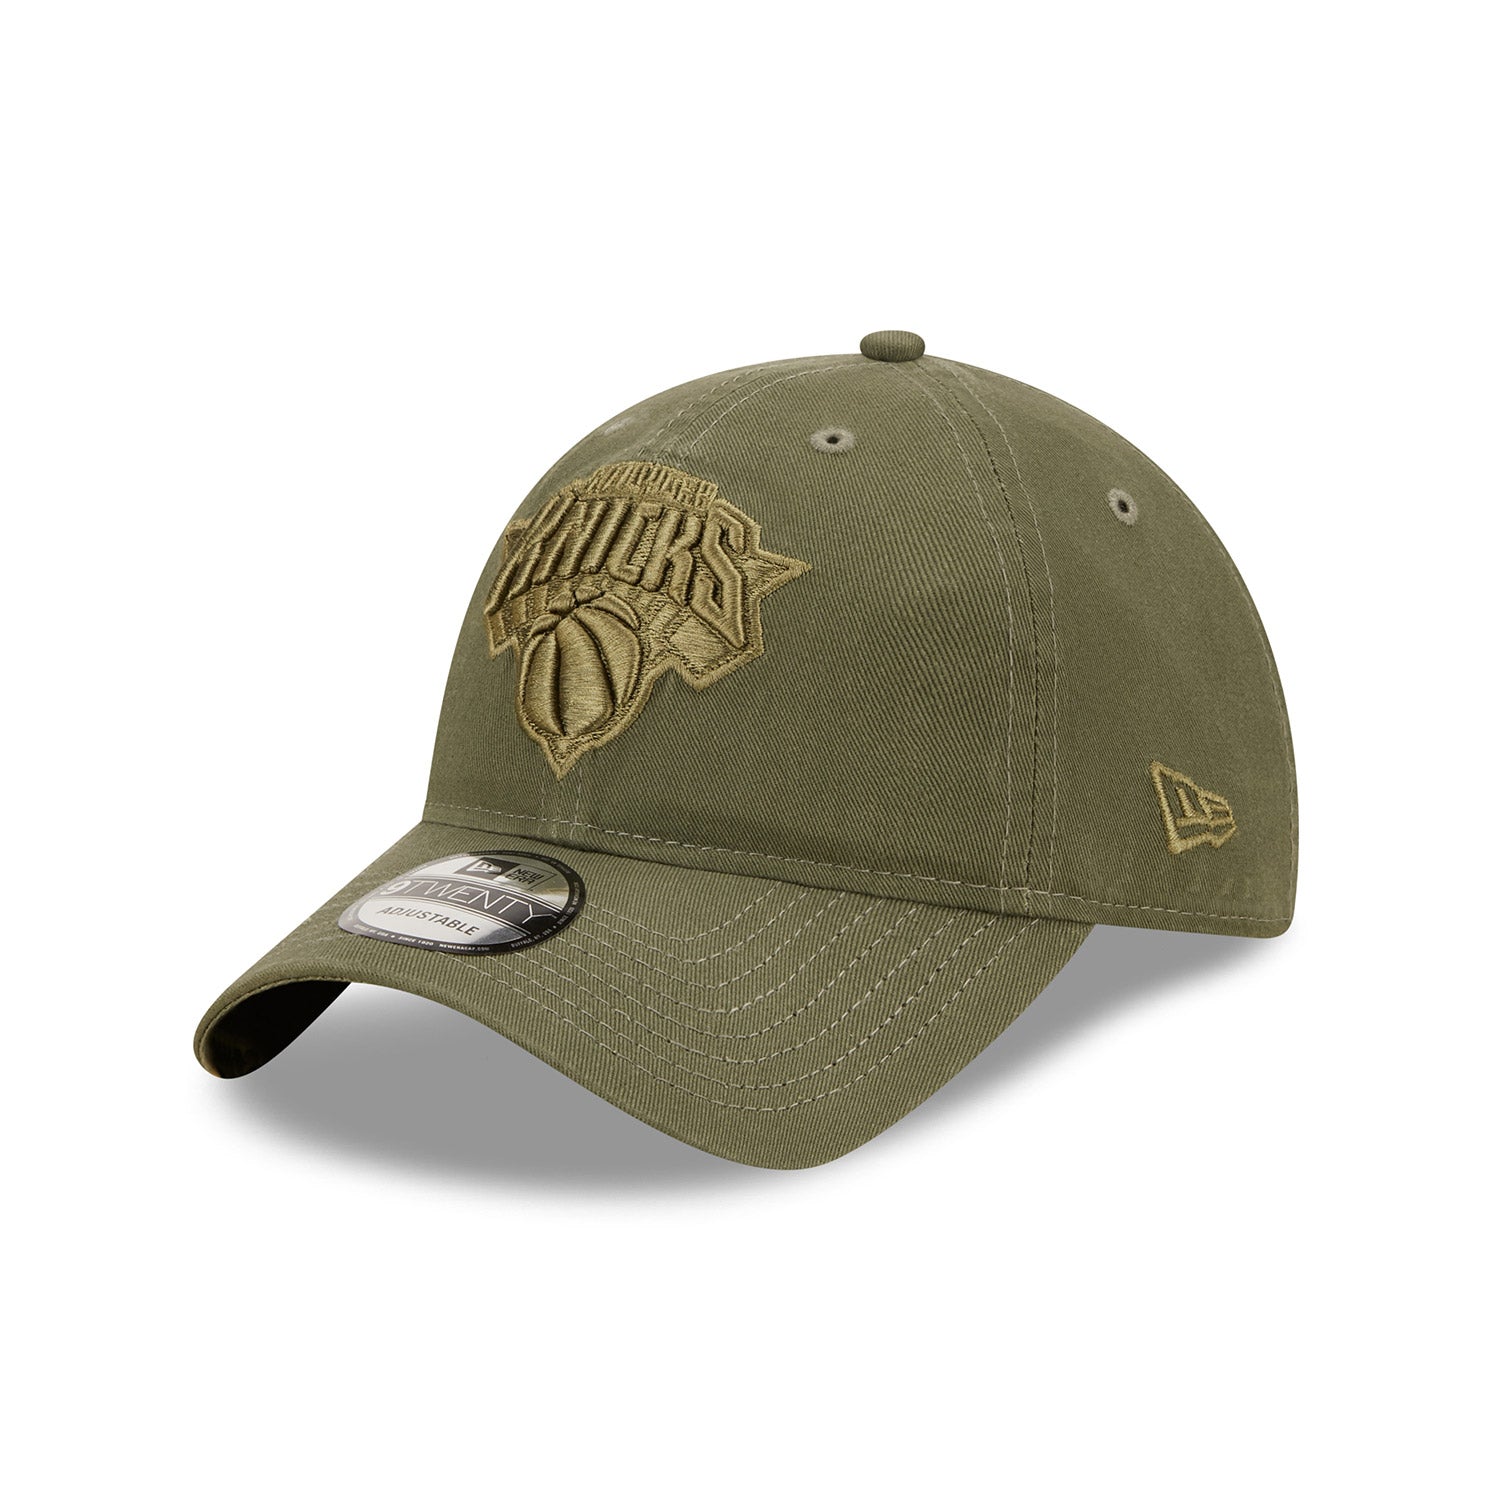 New Era Knicks Olive Green Tonal Core Classic Hat - Angled Left Side View